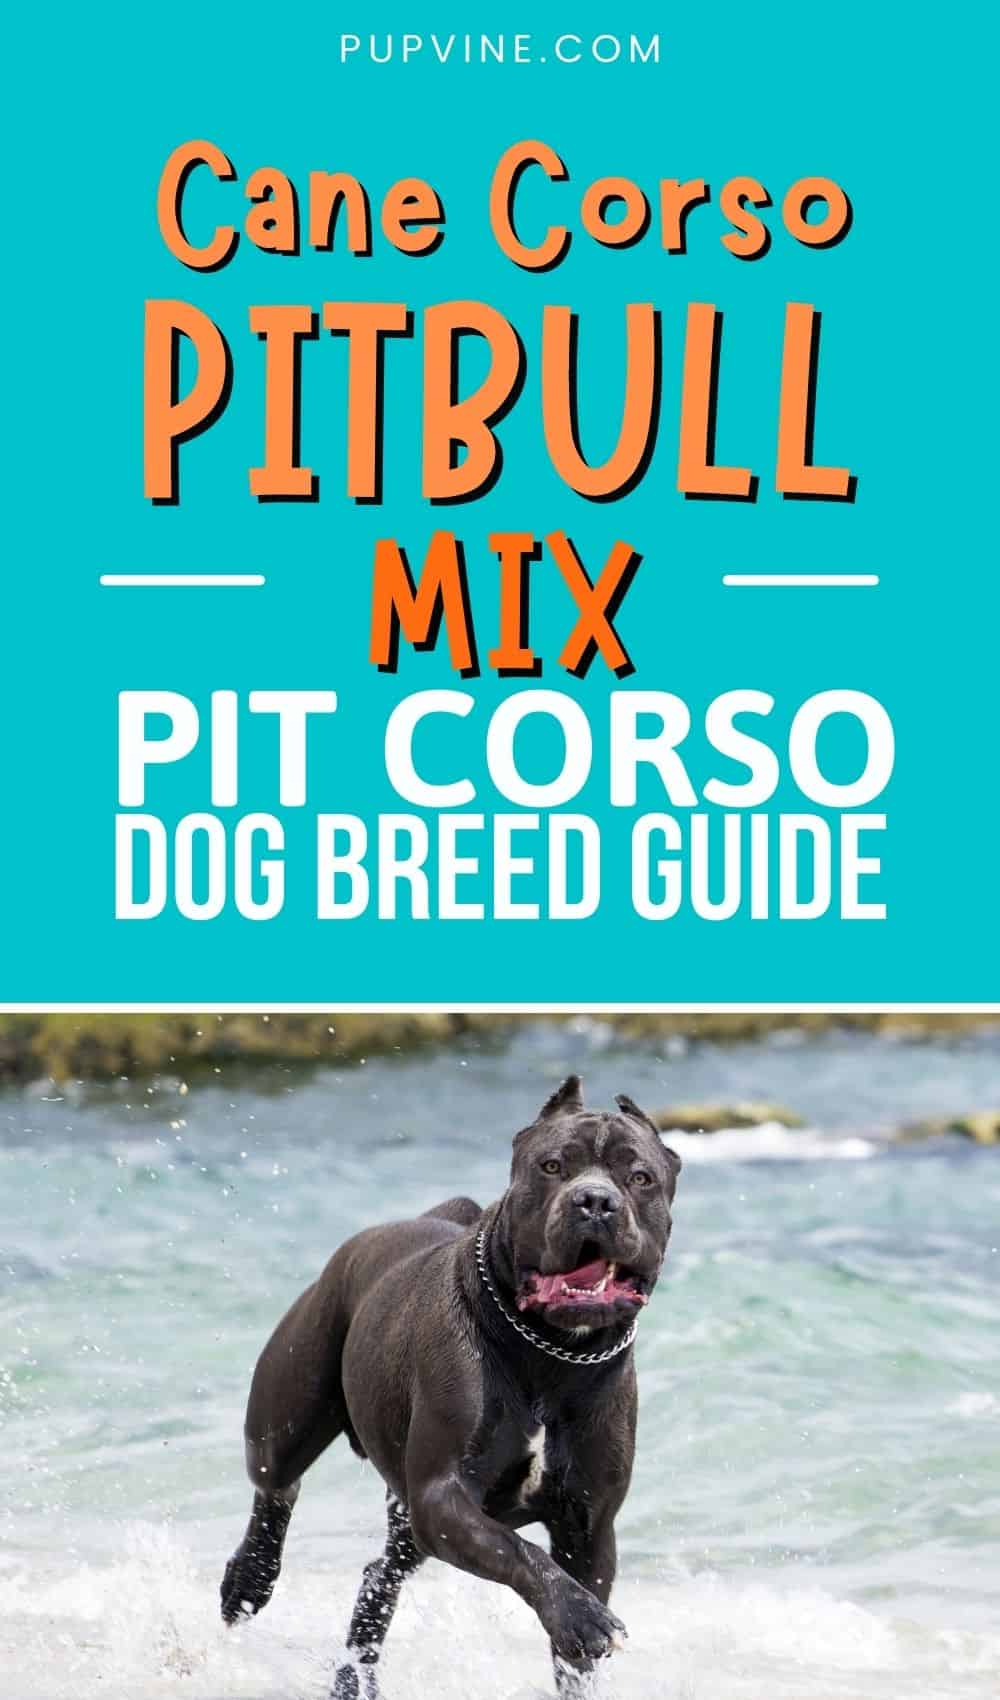 Cane Corso Pitbull Mix – Pit Corso Dog Breed Guide